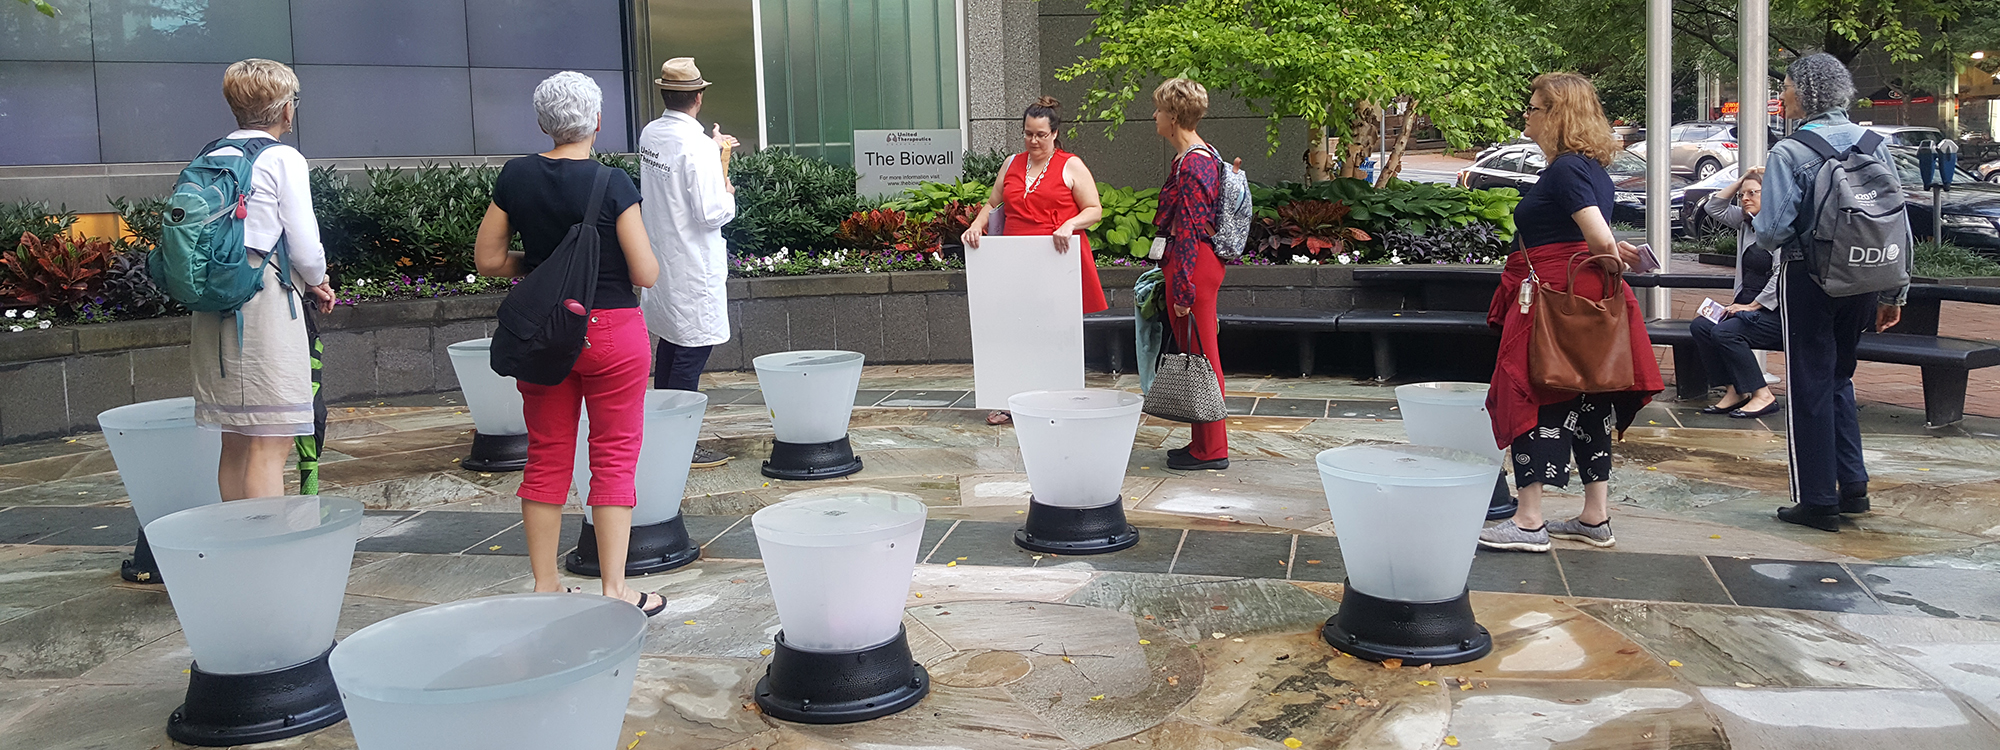 Participants explore outdoor art installation during Silver Spring Art Walk